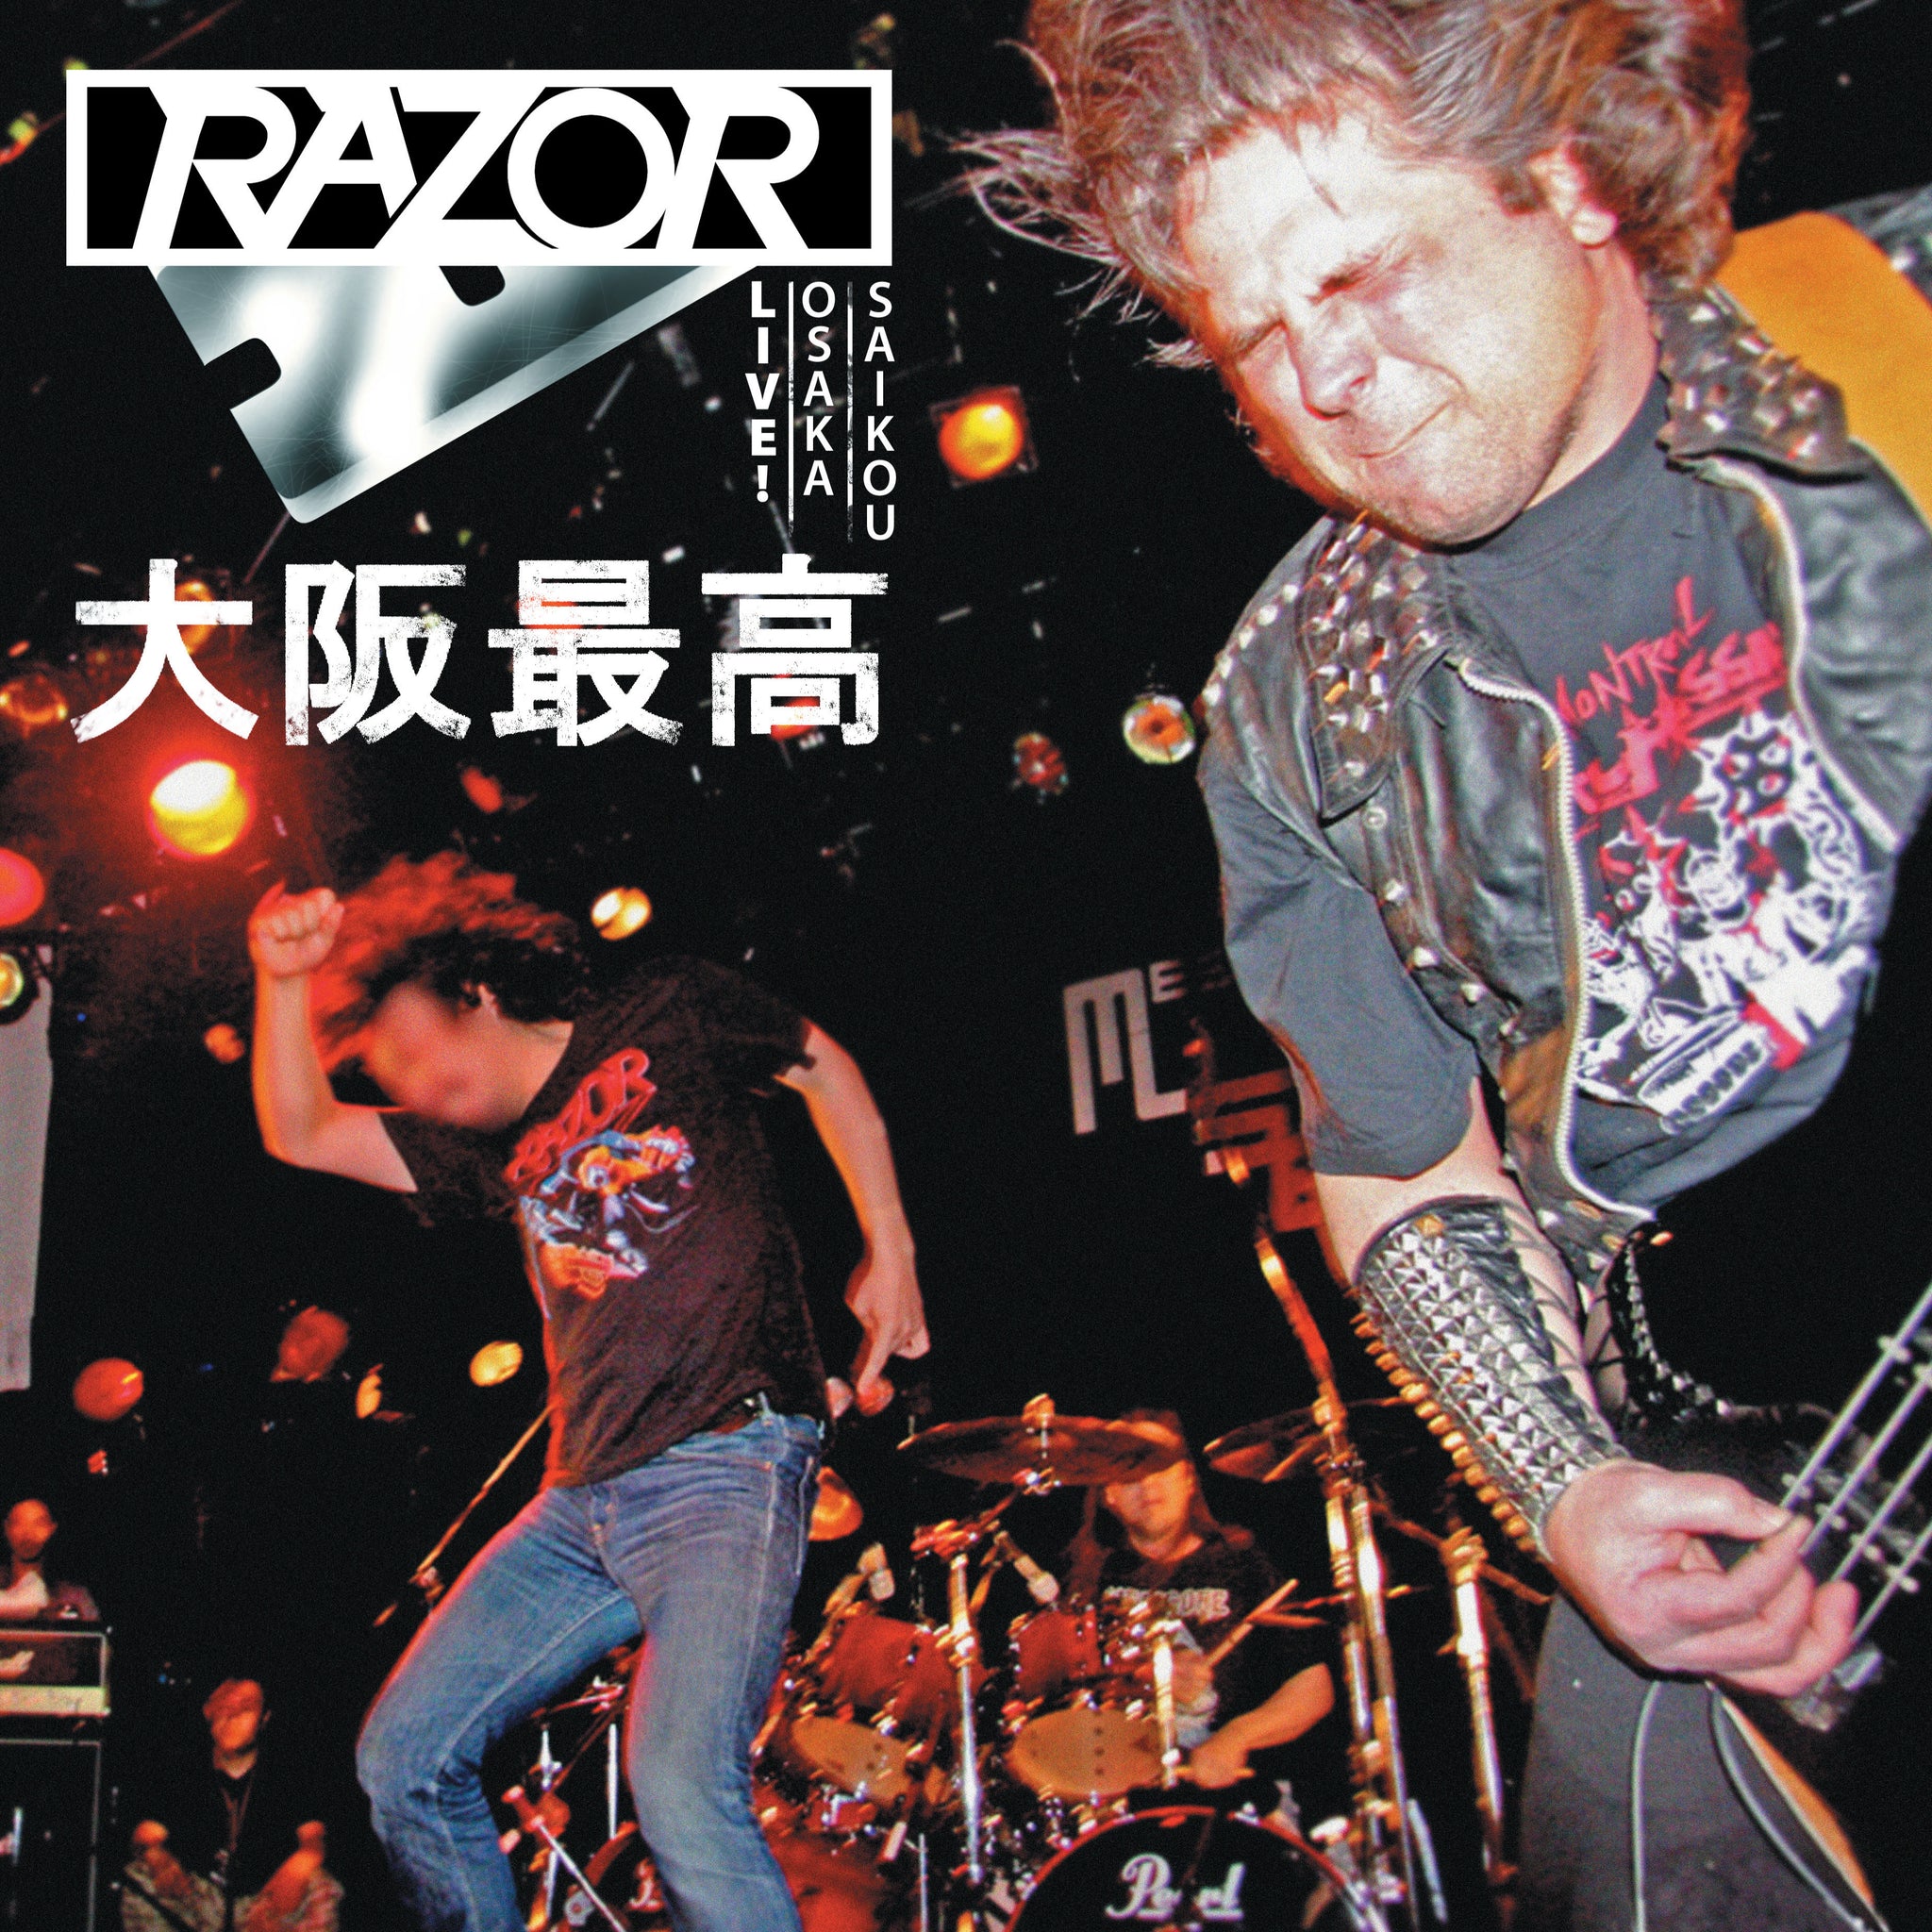 RAZOR - LIVE OSAKA SAIKOU (Blood Red w/ Splatter Vinyl) 2xLP